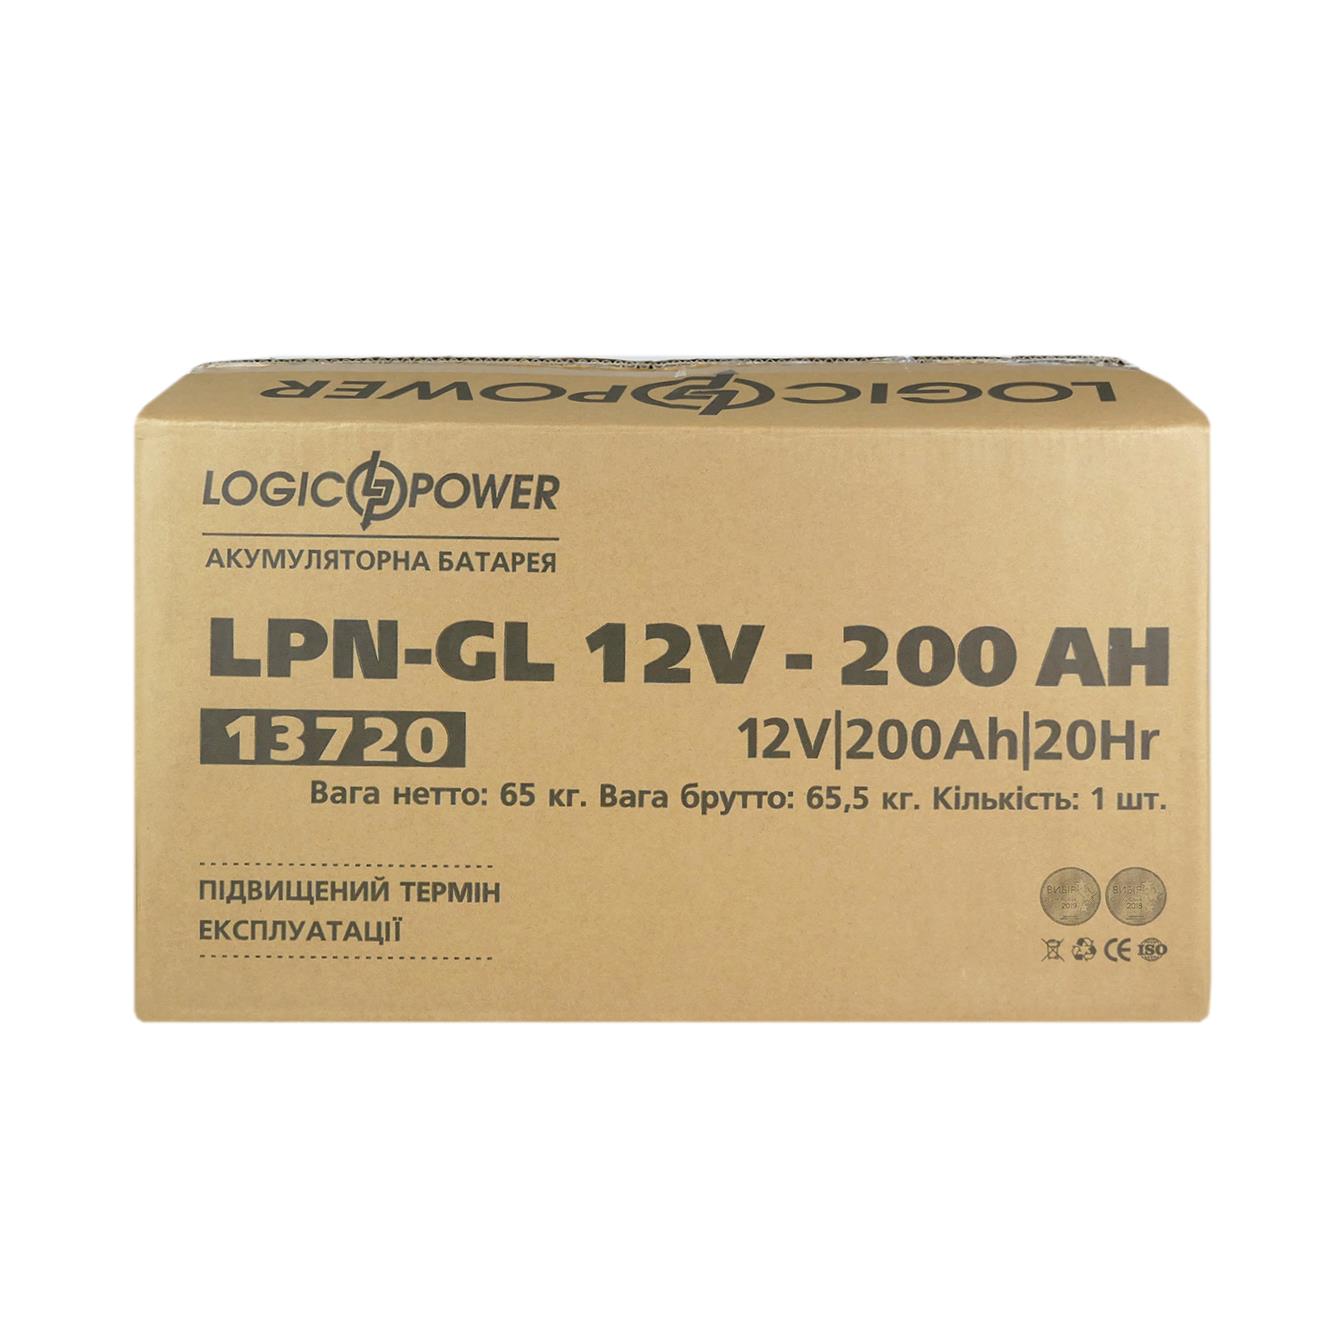 Аккумулятор гелевый LogicPower LPN-GL 12V - 200 Ah (13720) характеристики - фотография 7